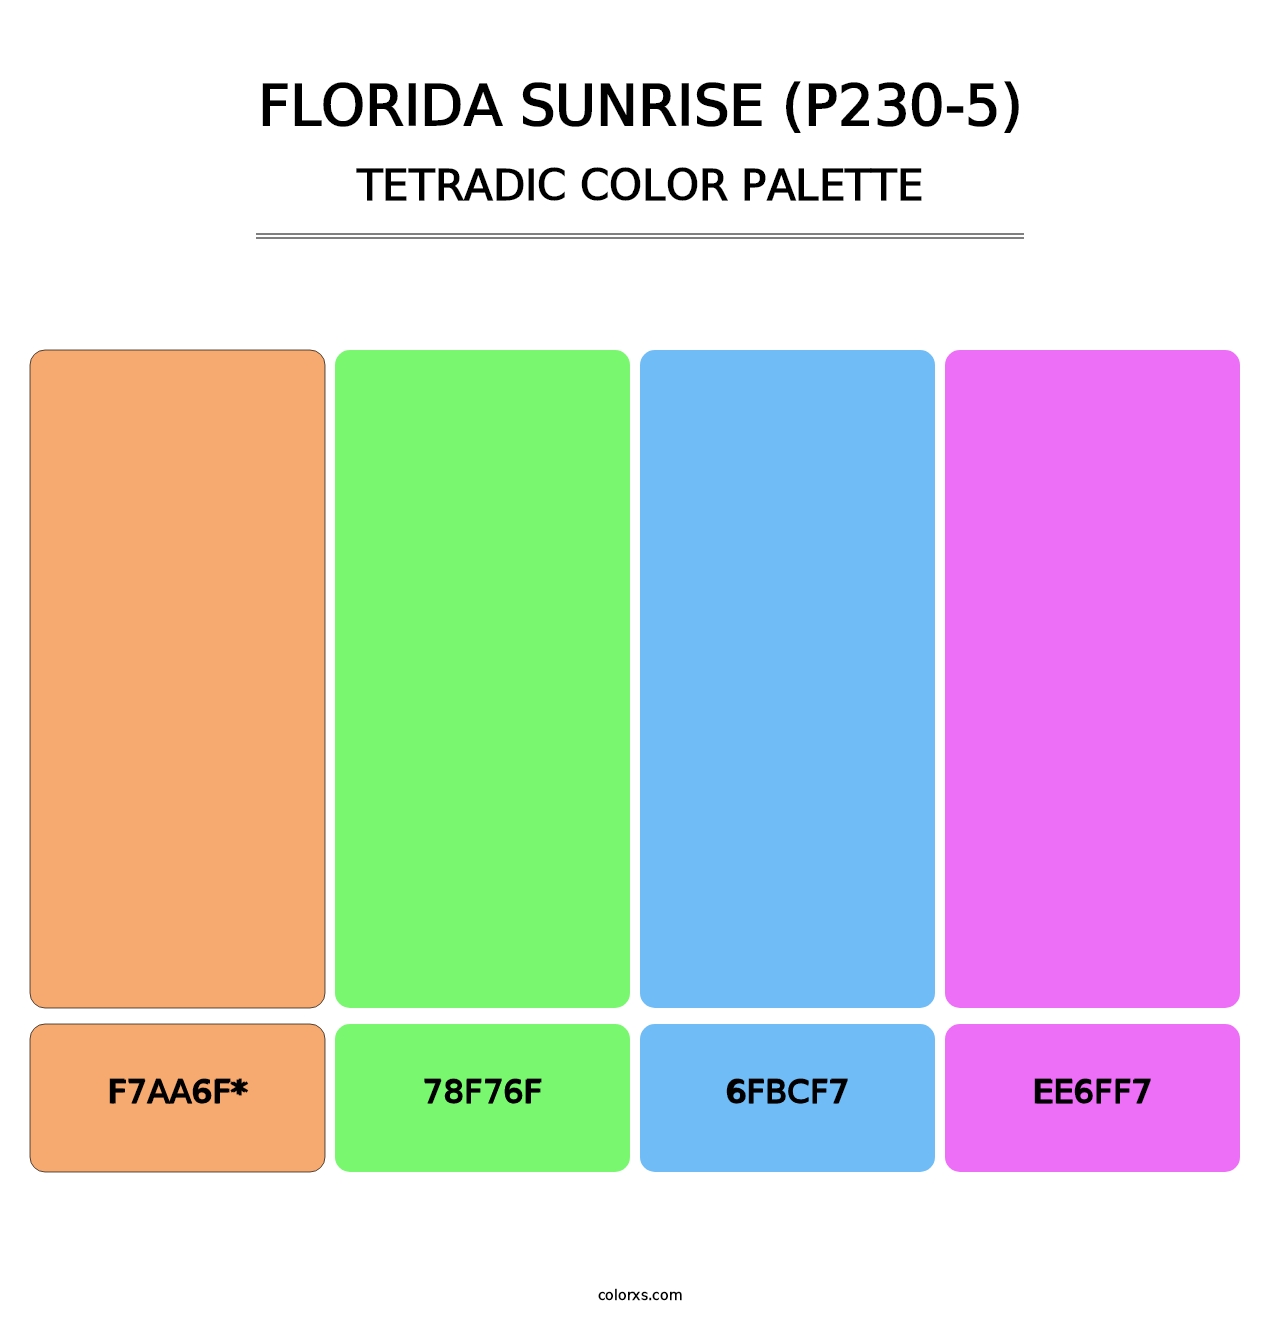 Florida Sunrise (P230-5) - Tetradic Color Palette